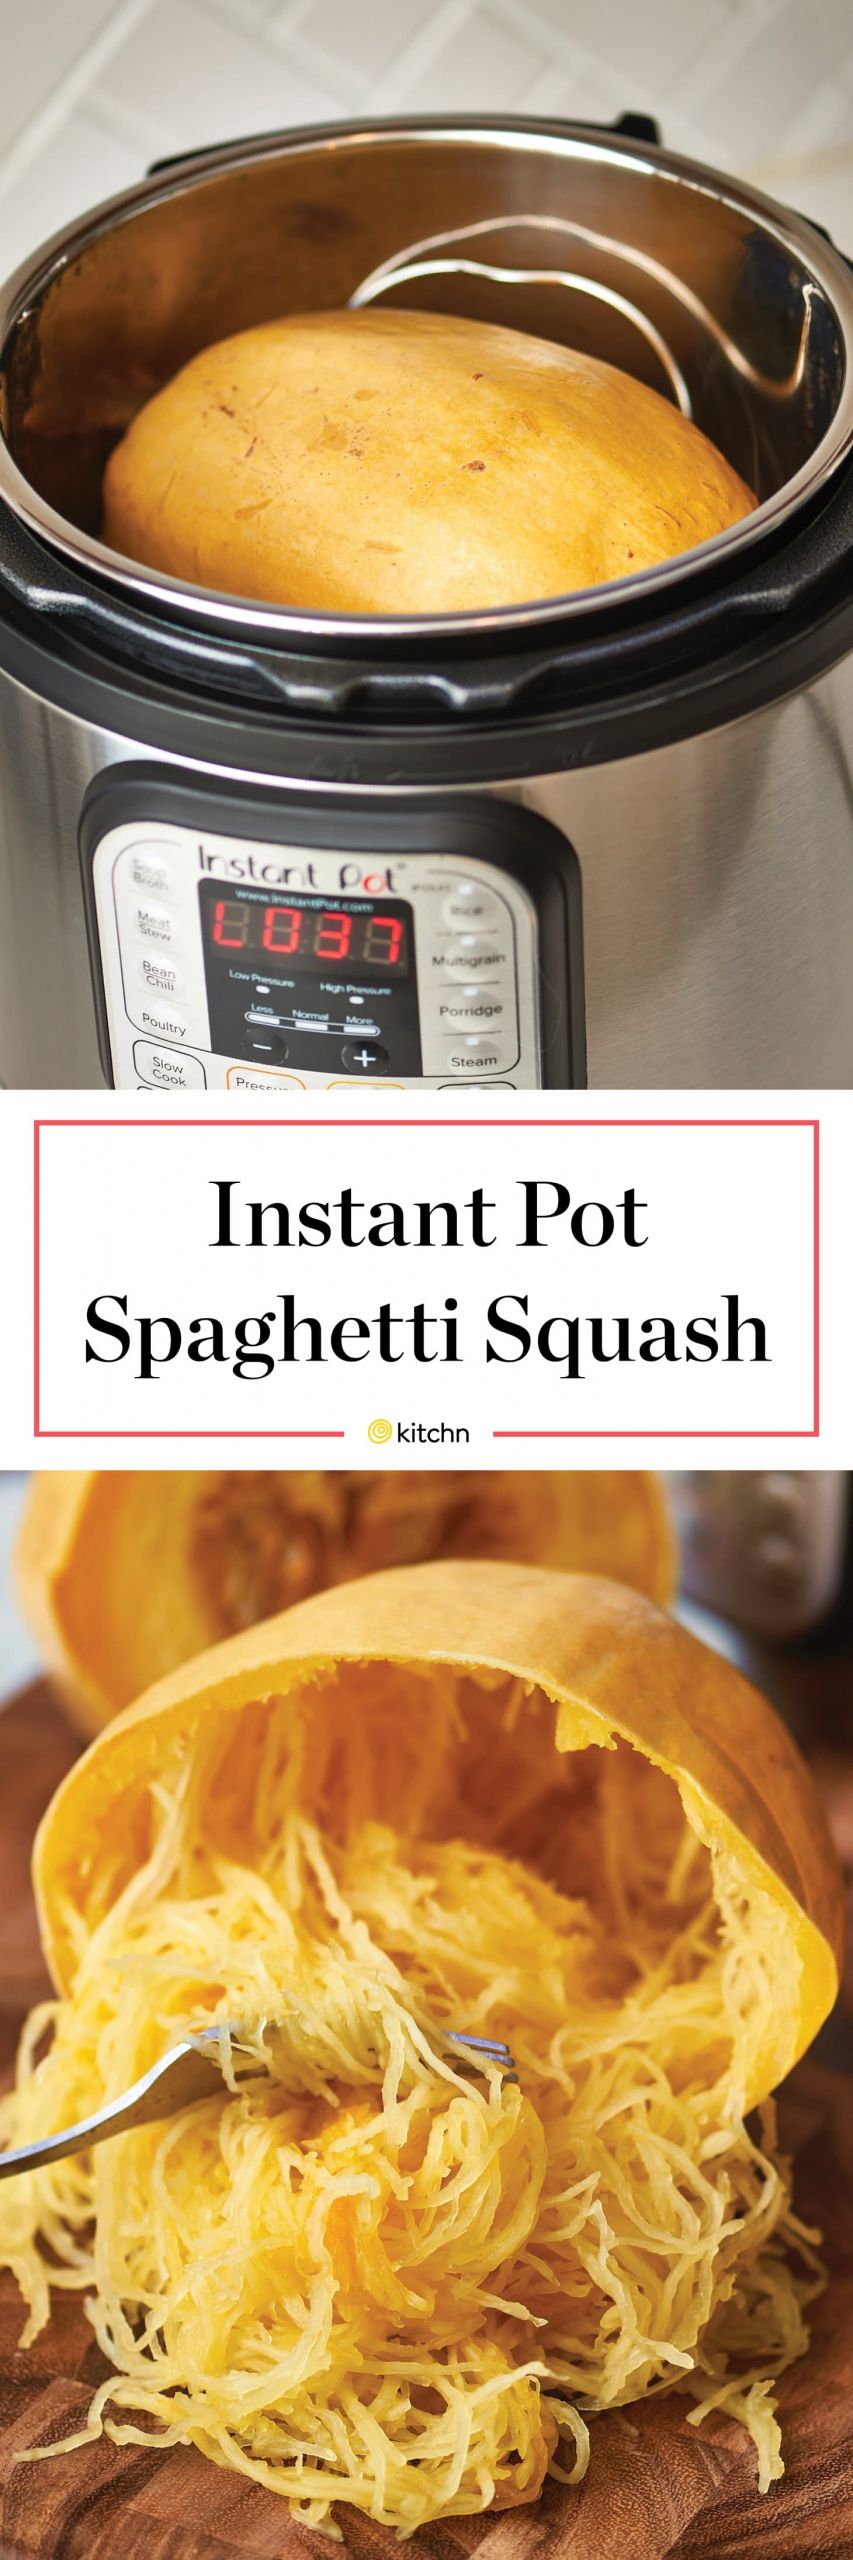 Spaghetti Squash Microwave Whole
 How To Cook Spaghetti Squash in an Electric Pressure